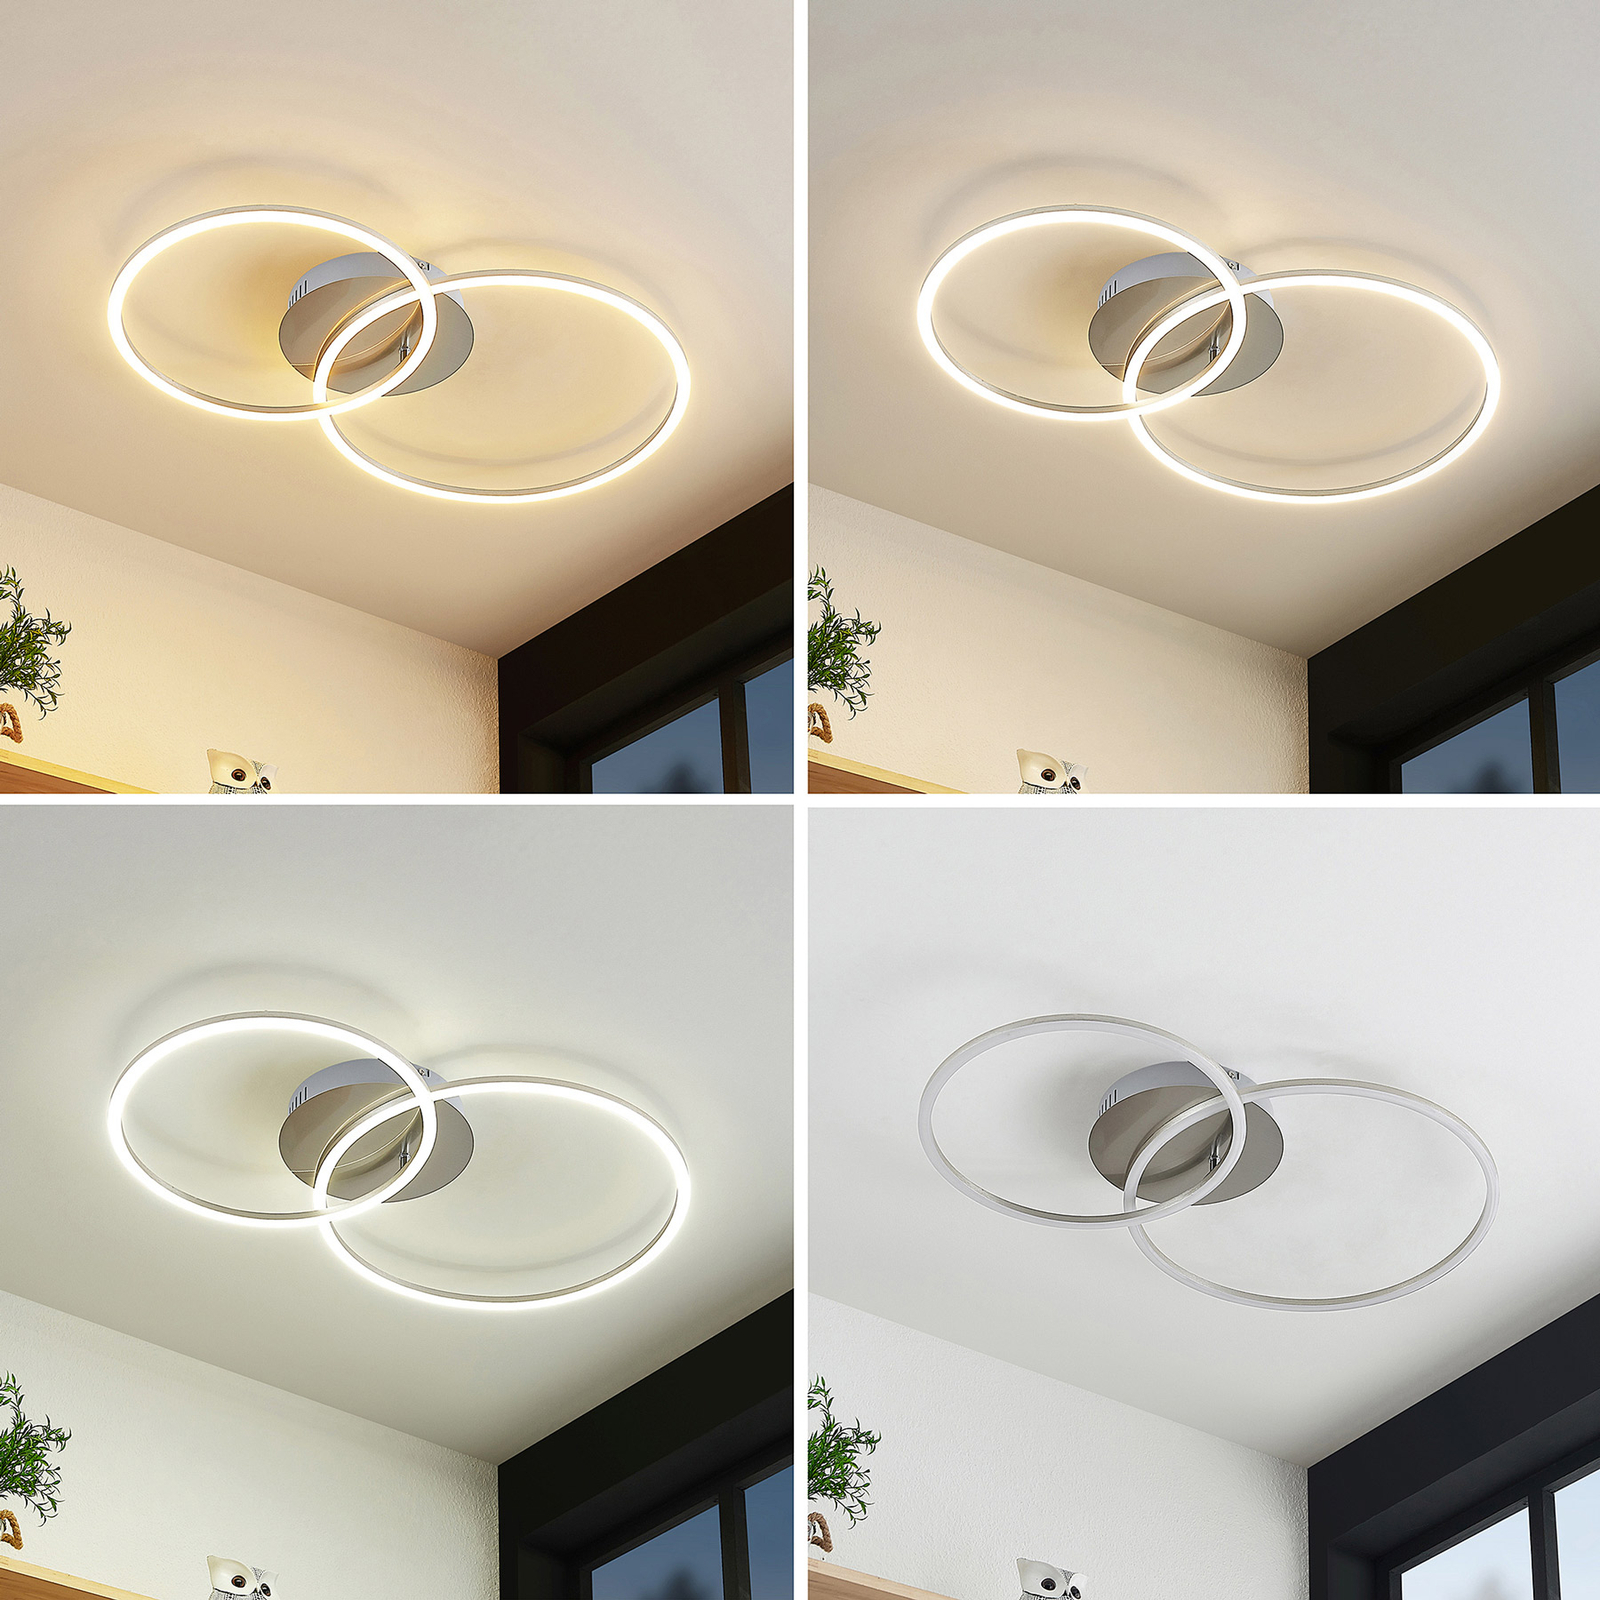 Lucande Lucardis LED plafondlamp, 2-lamps, rond